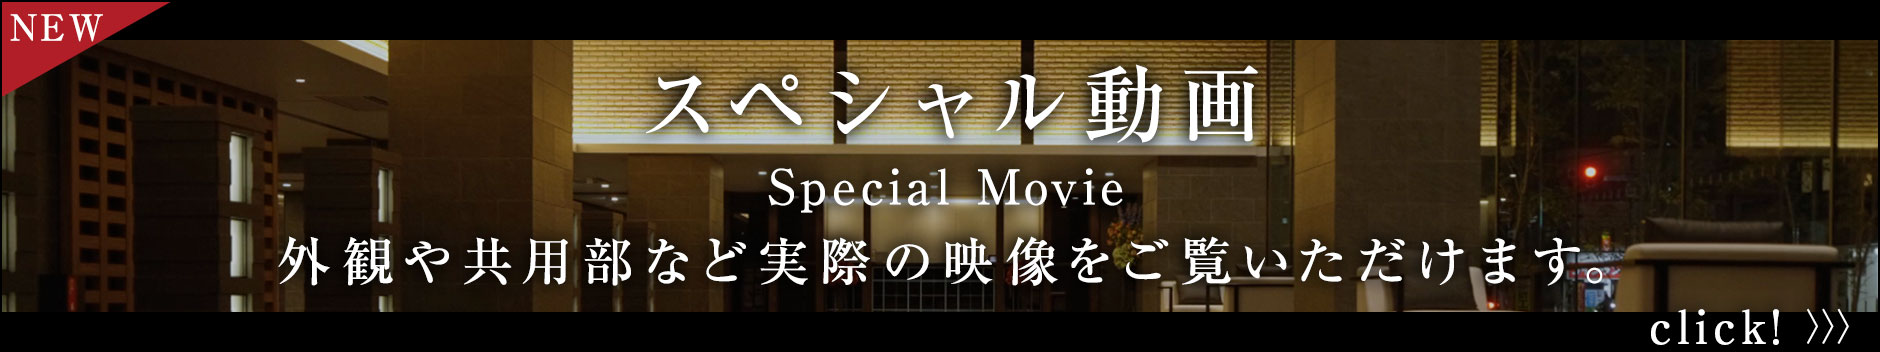 Special movie